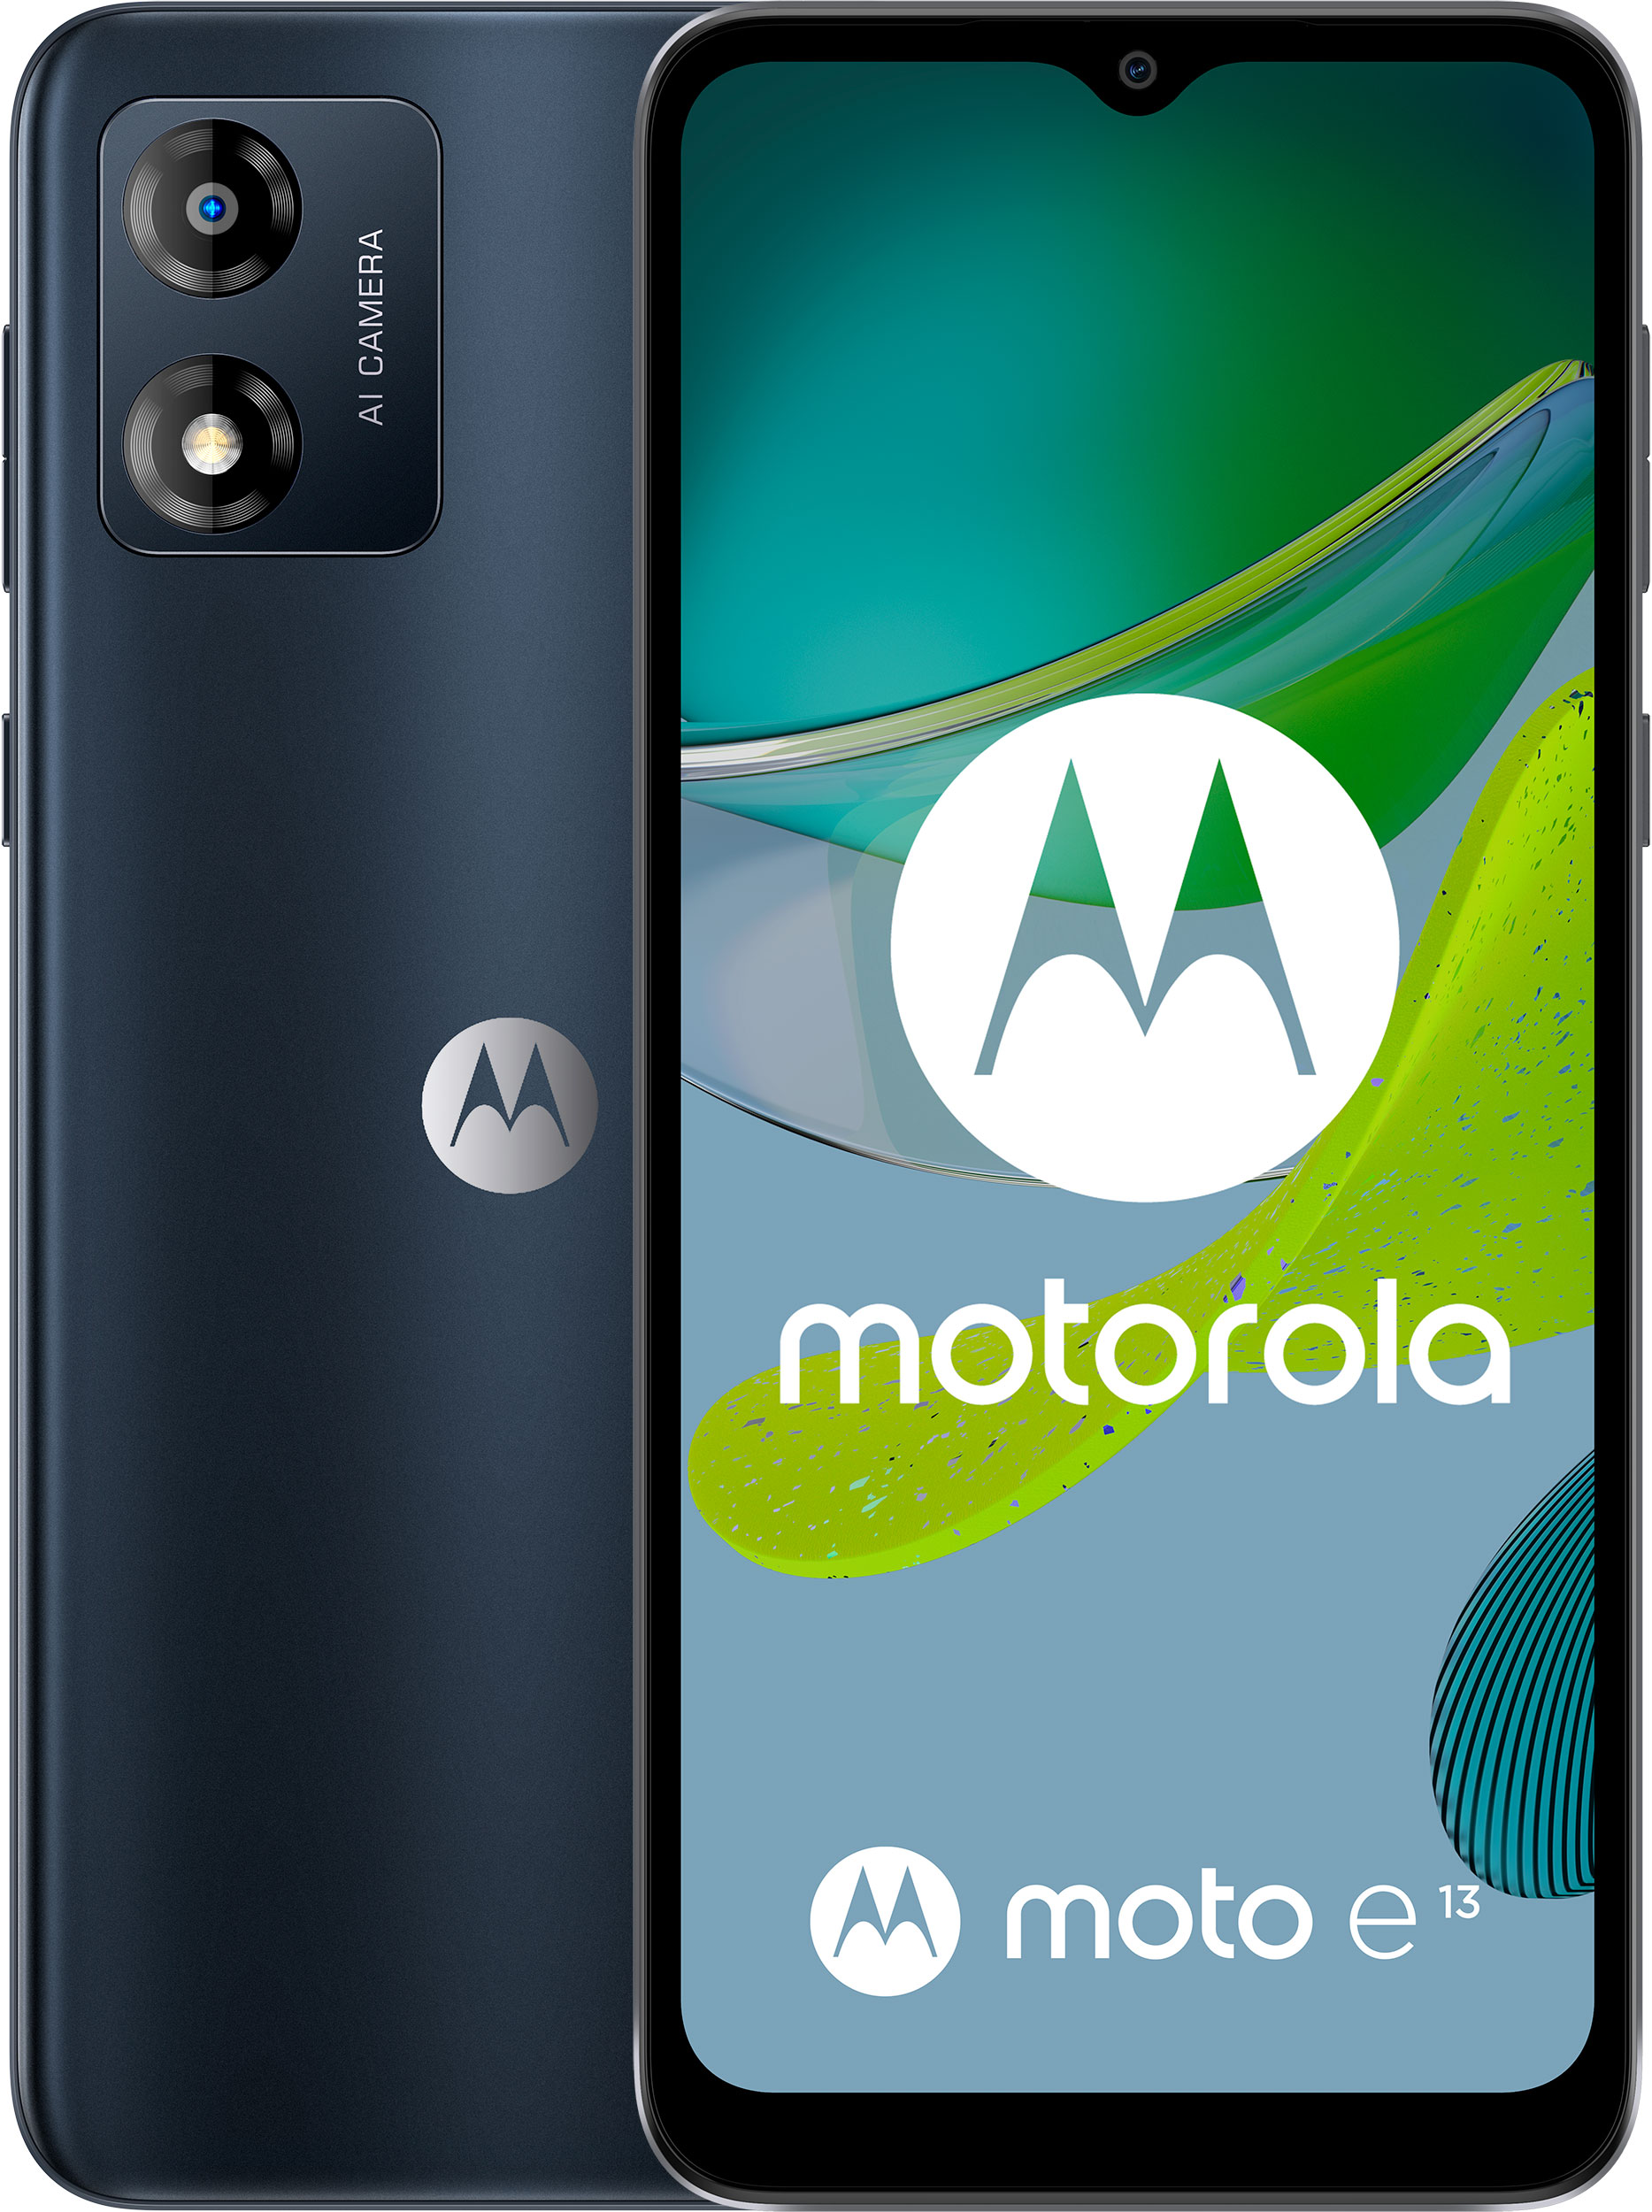 Motorola Moto e13 Review: Budget Compromises 